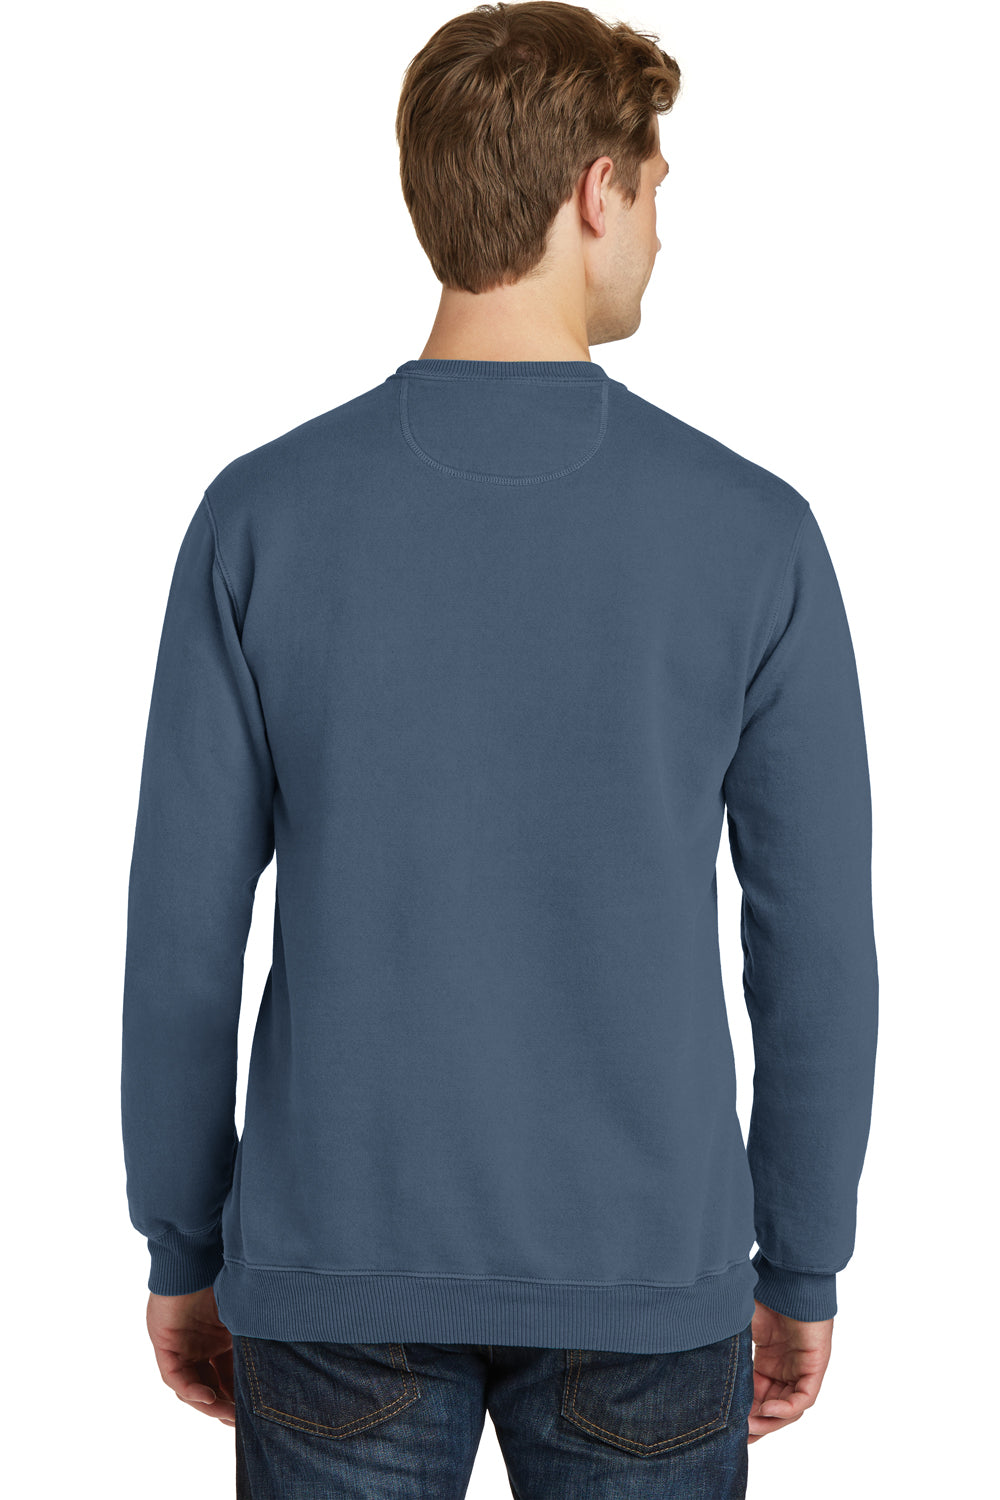 Port & Company PC098 Mens Beach Wash Fleece Crewneck Sweatshirt Denim Blue Back